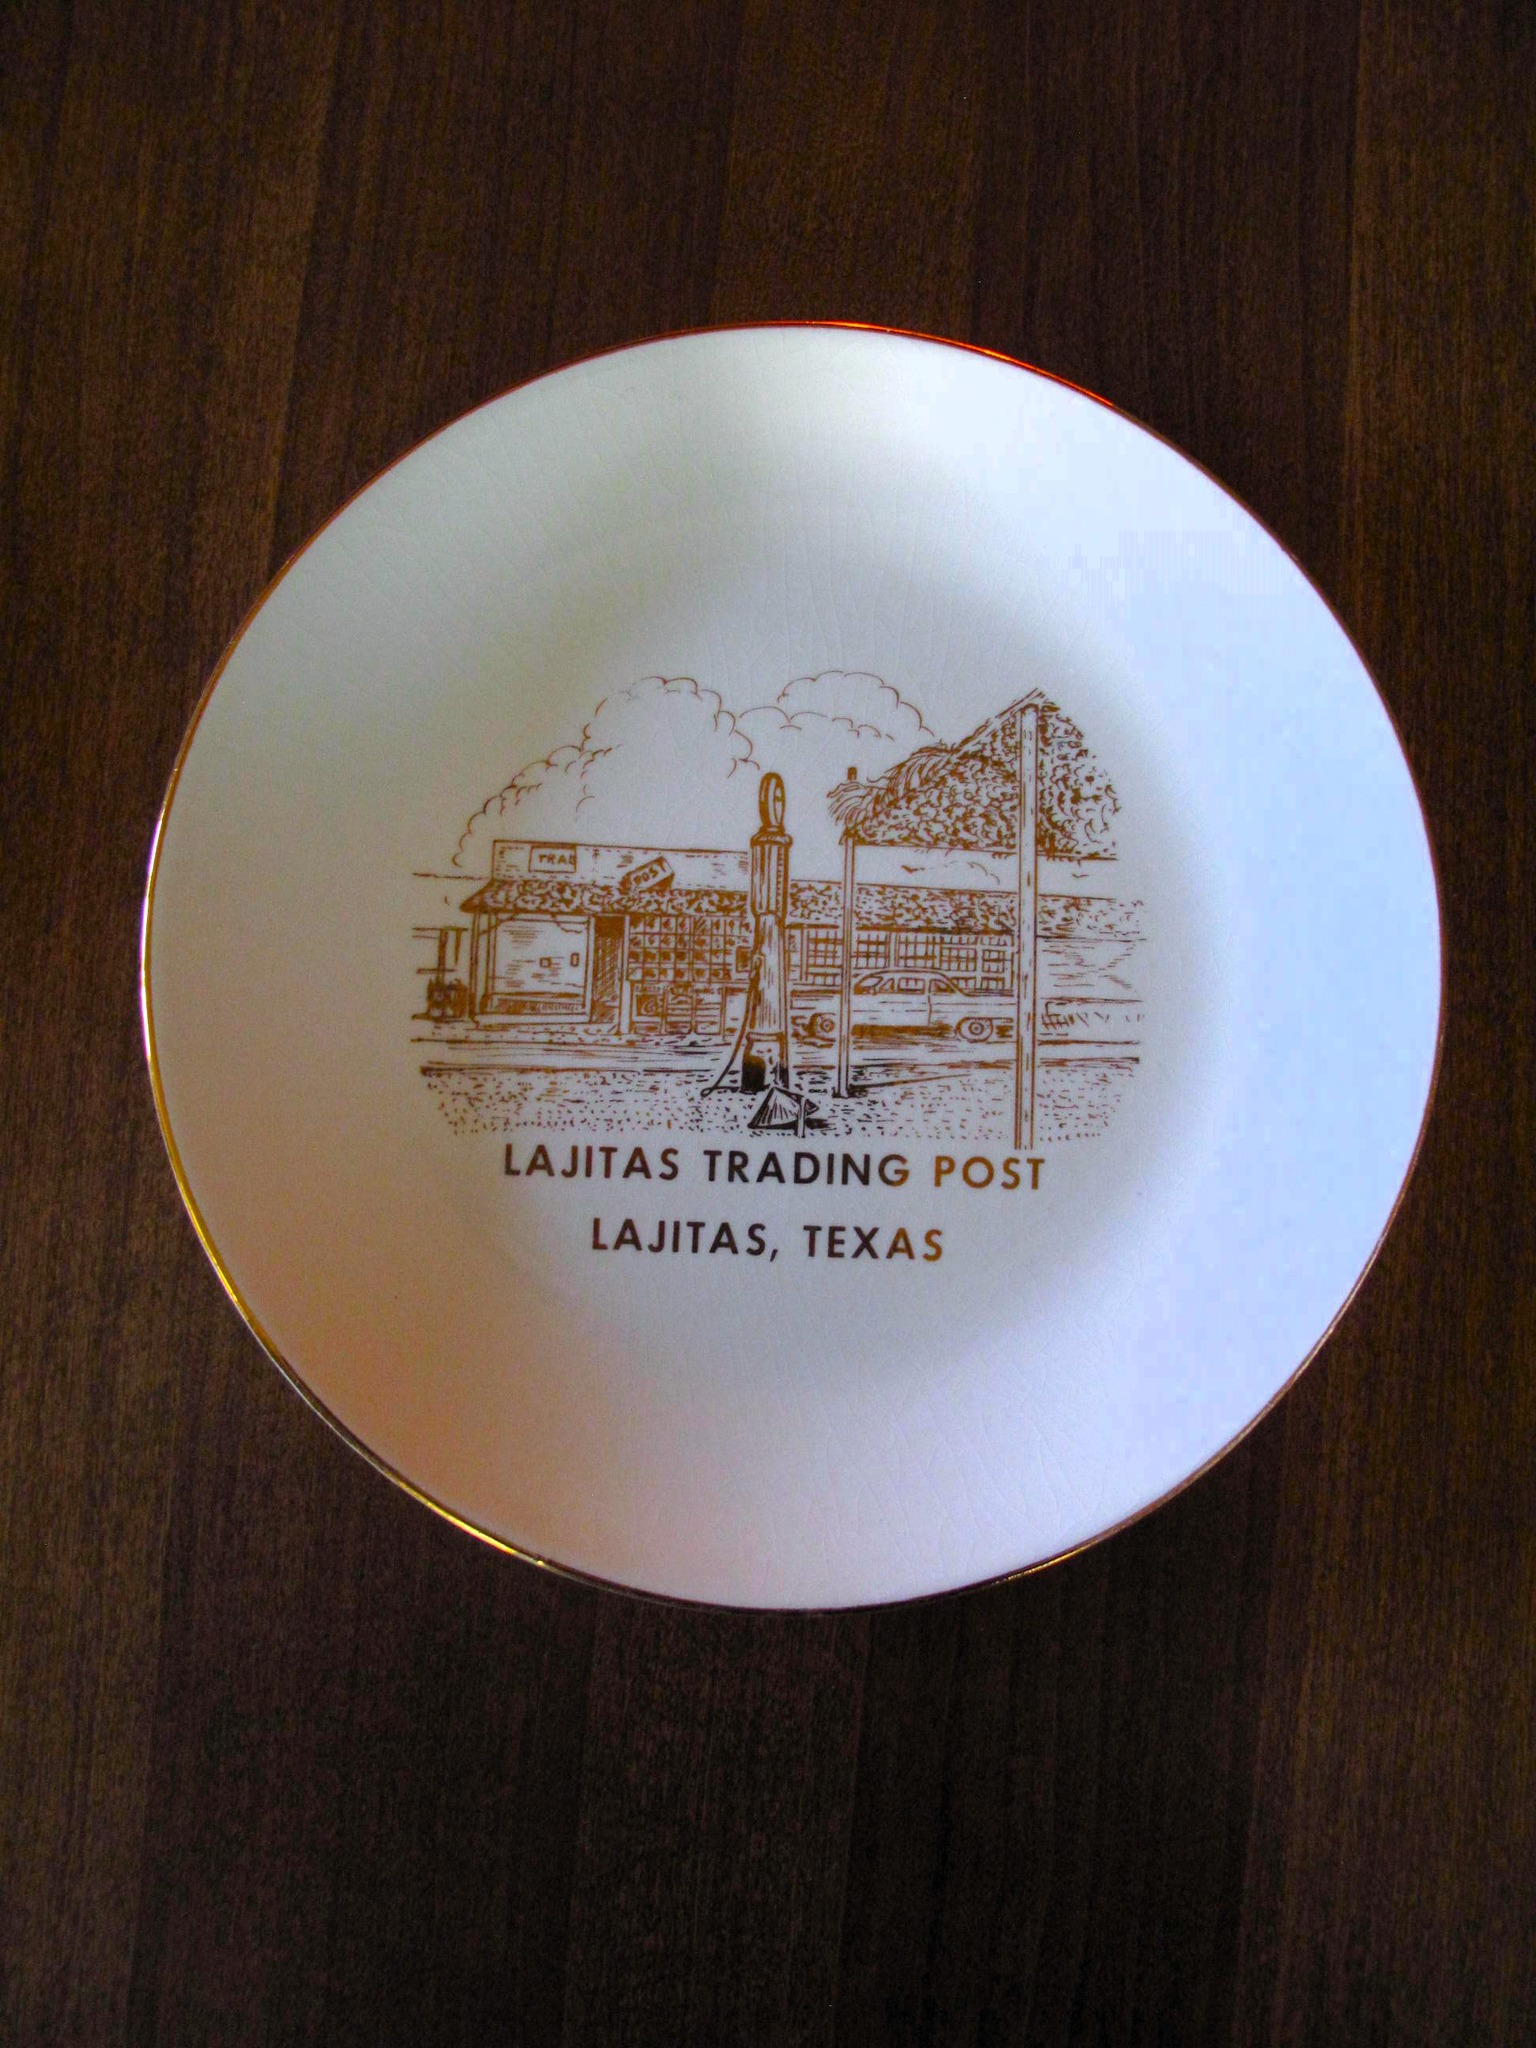 Vintage souvenir plate from Lajitas Trading Post